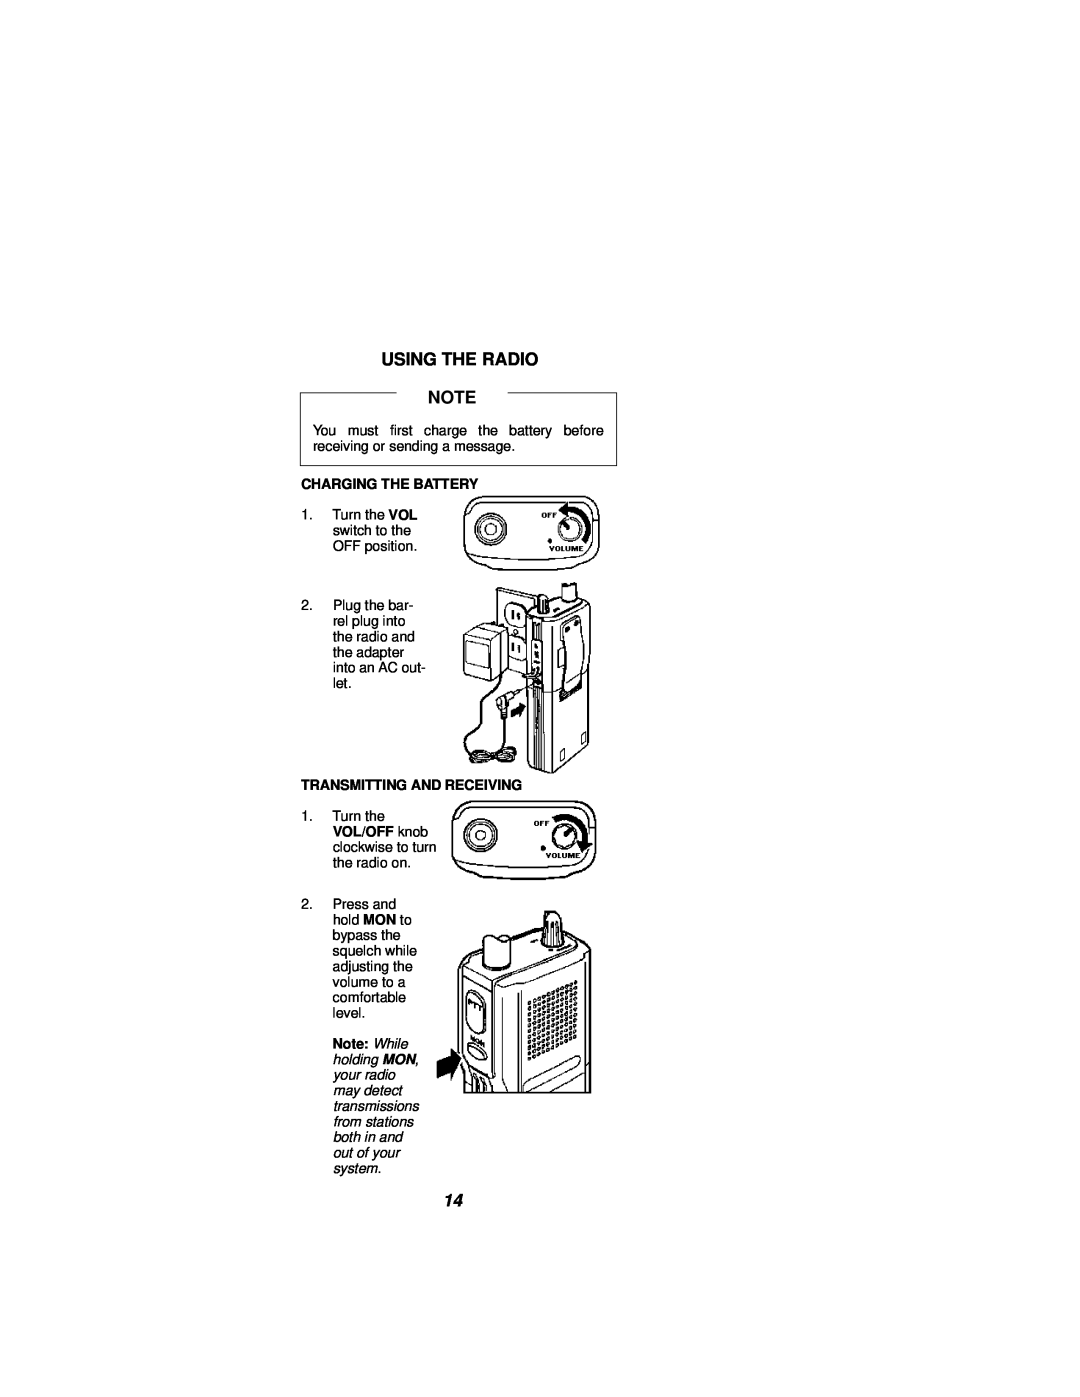 Ericsson NPC-50 manual Using The Radio, Charging The Battery, Transmitting And Receiving 